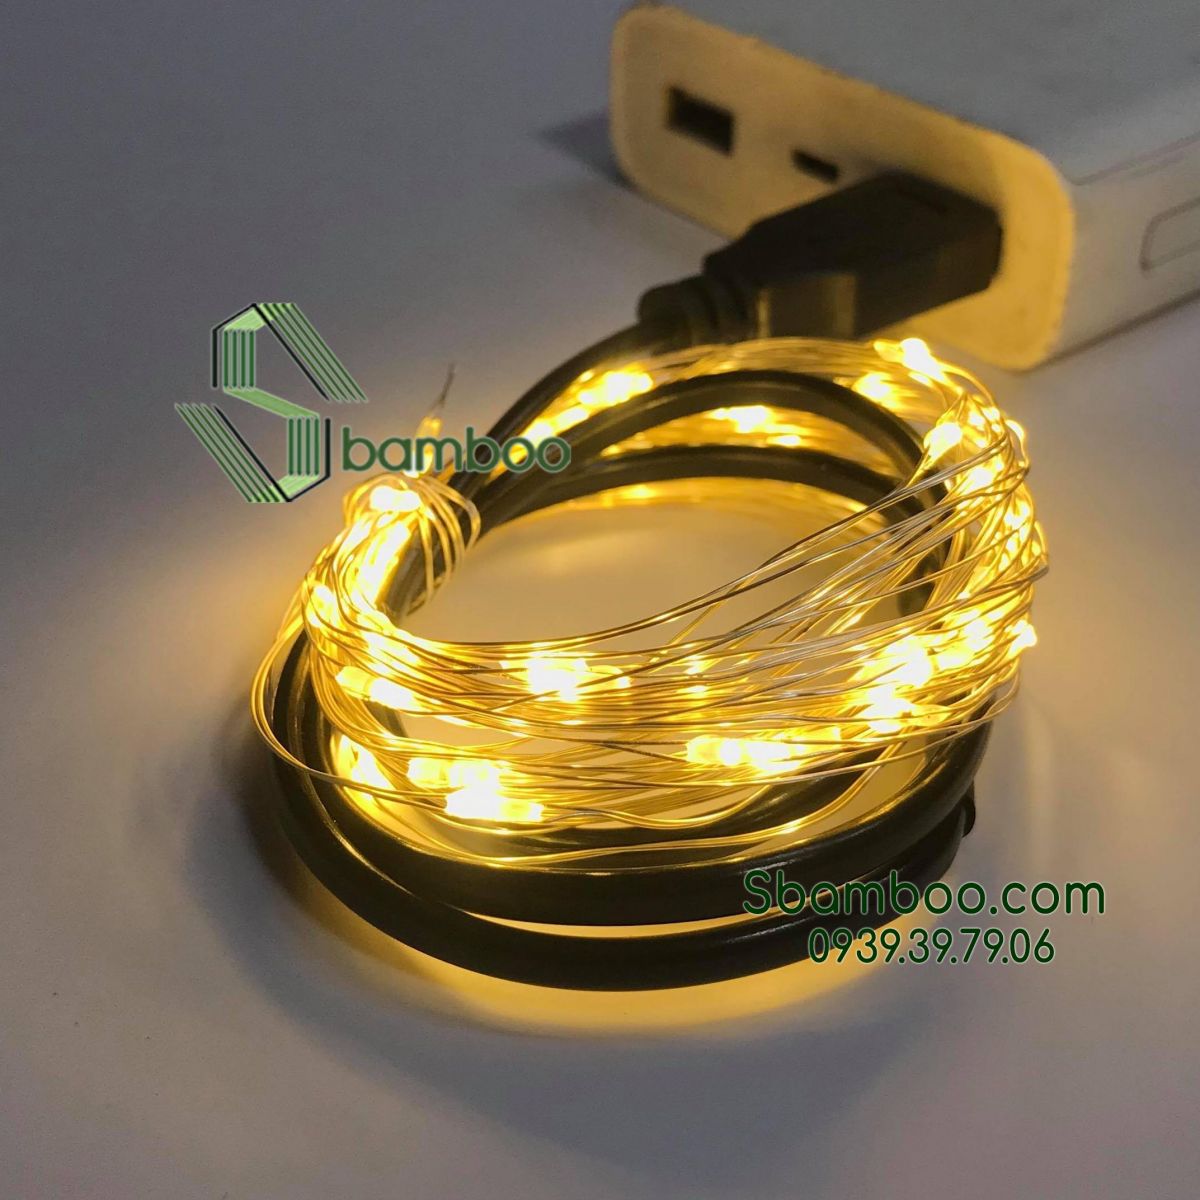 Led fireflies light SBamboo 5m - USB